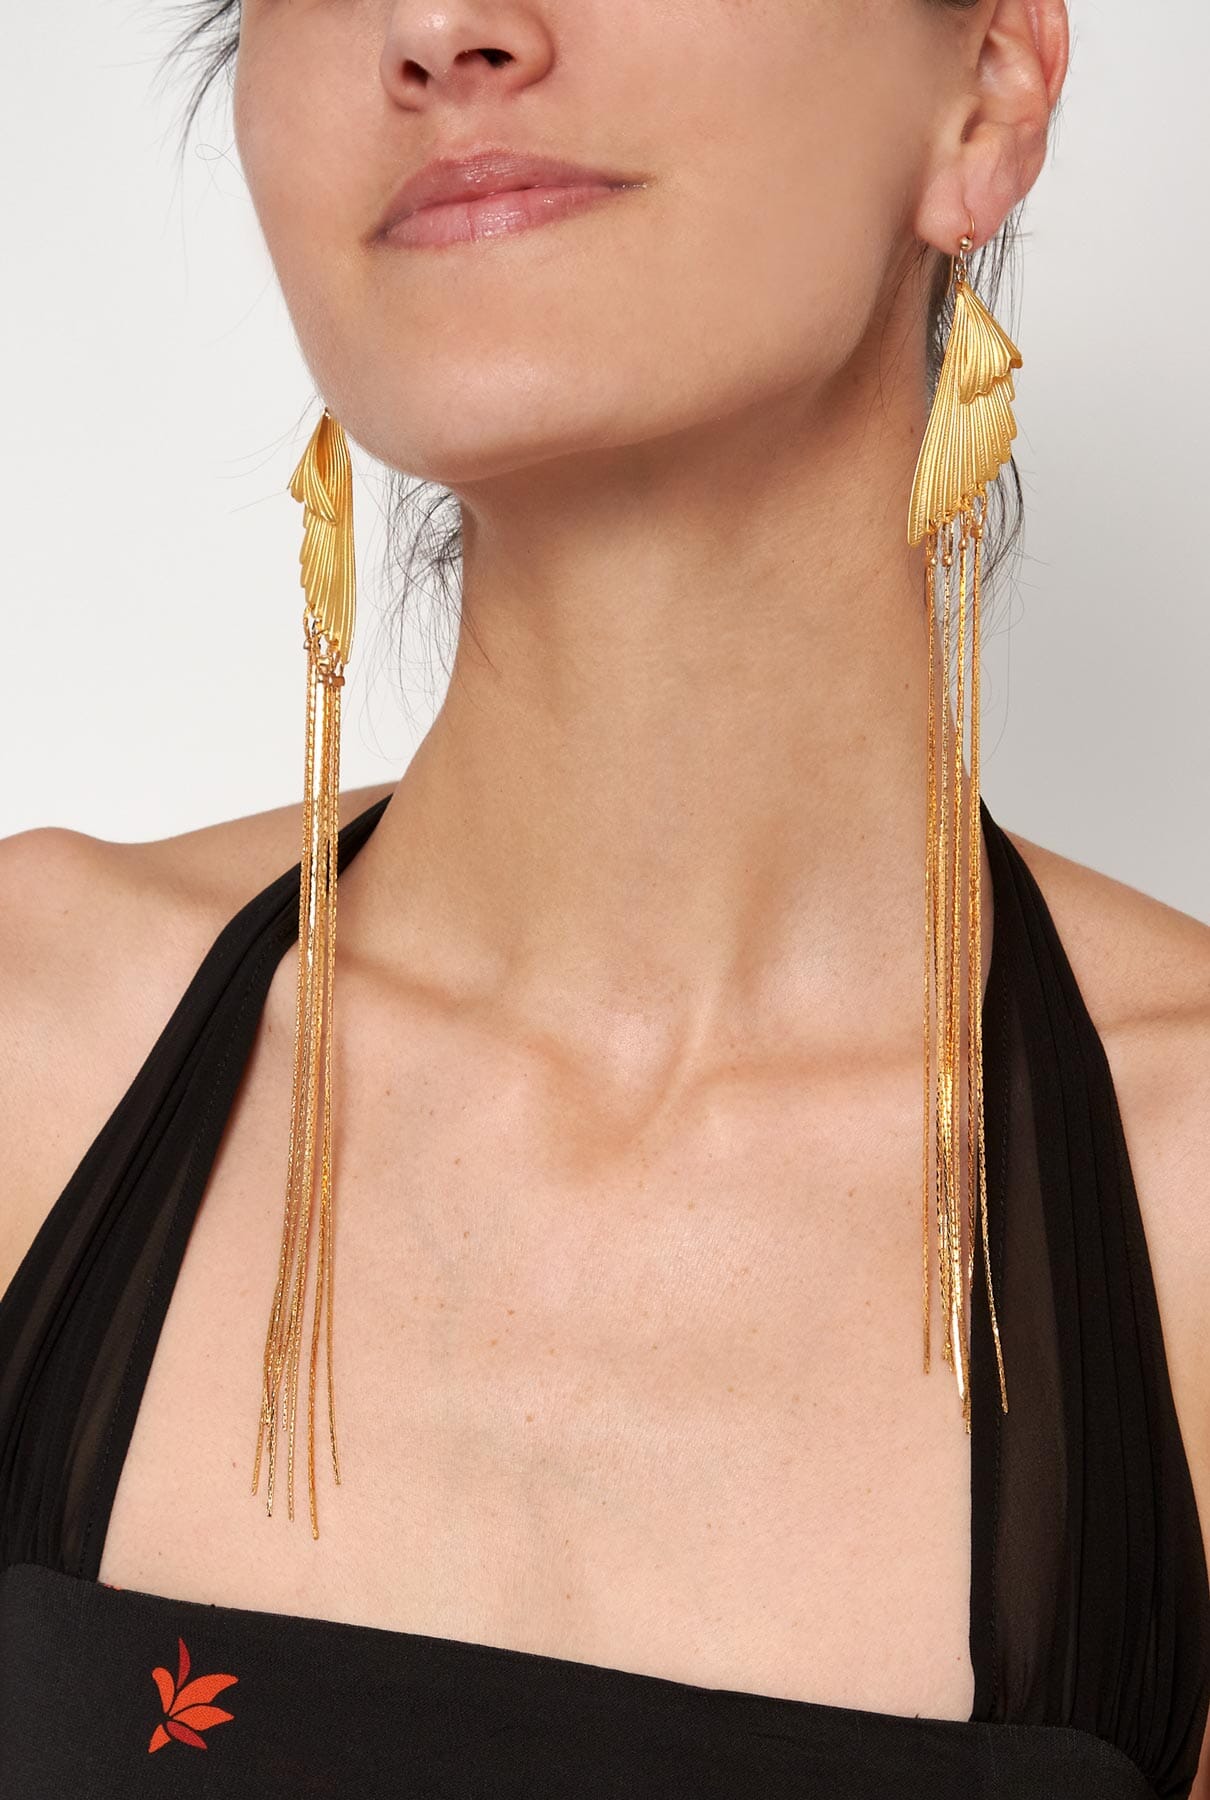 Angel Gold Earrings Earrings La Morenita 